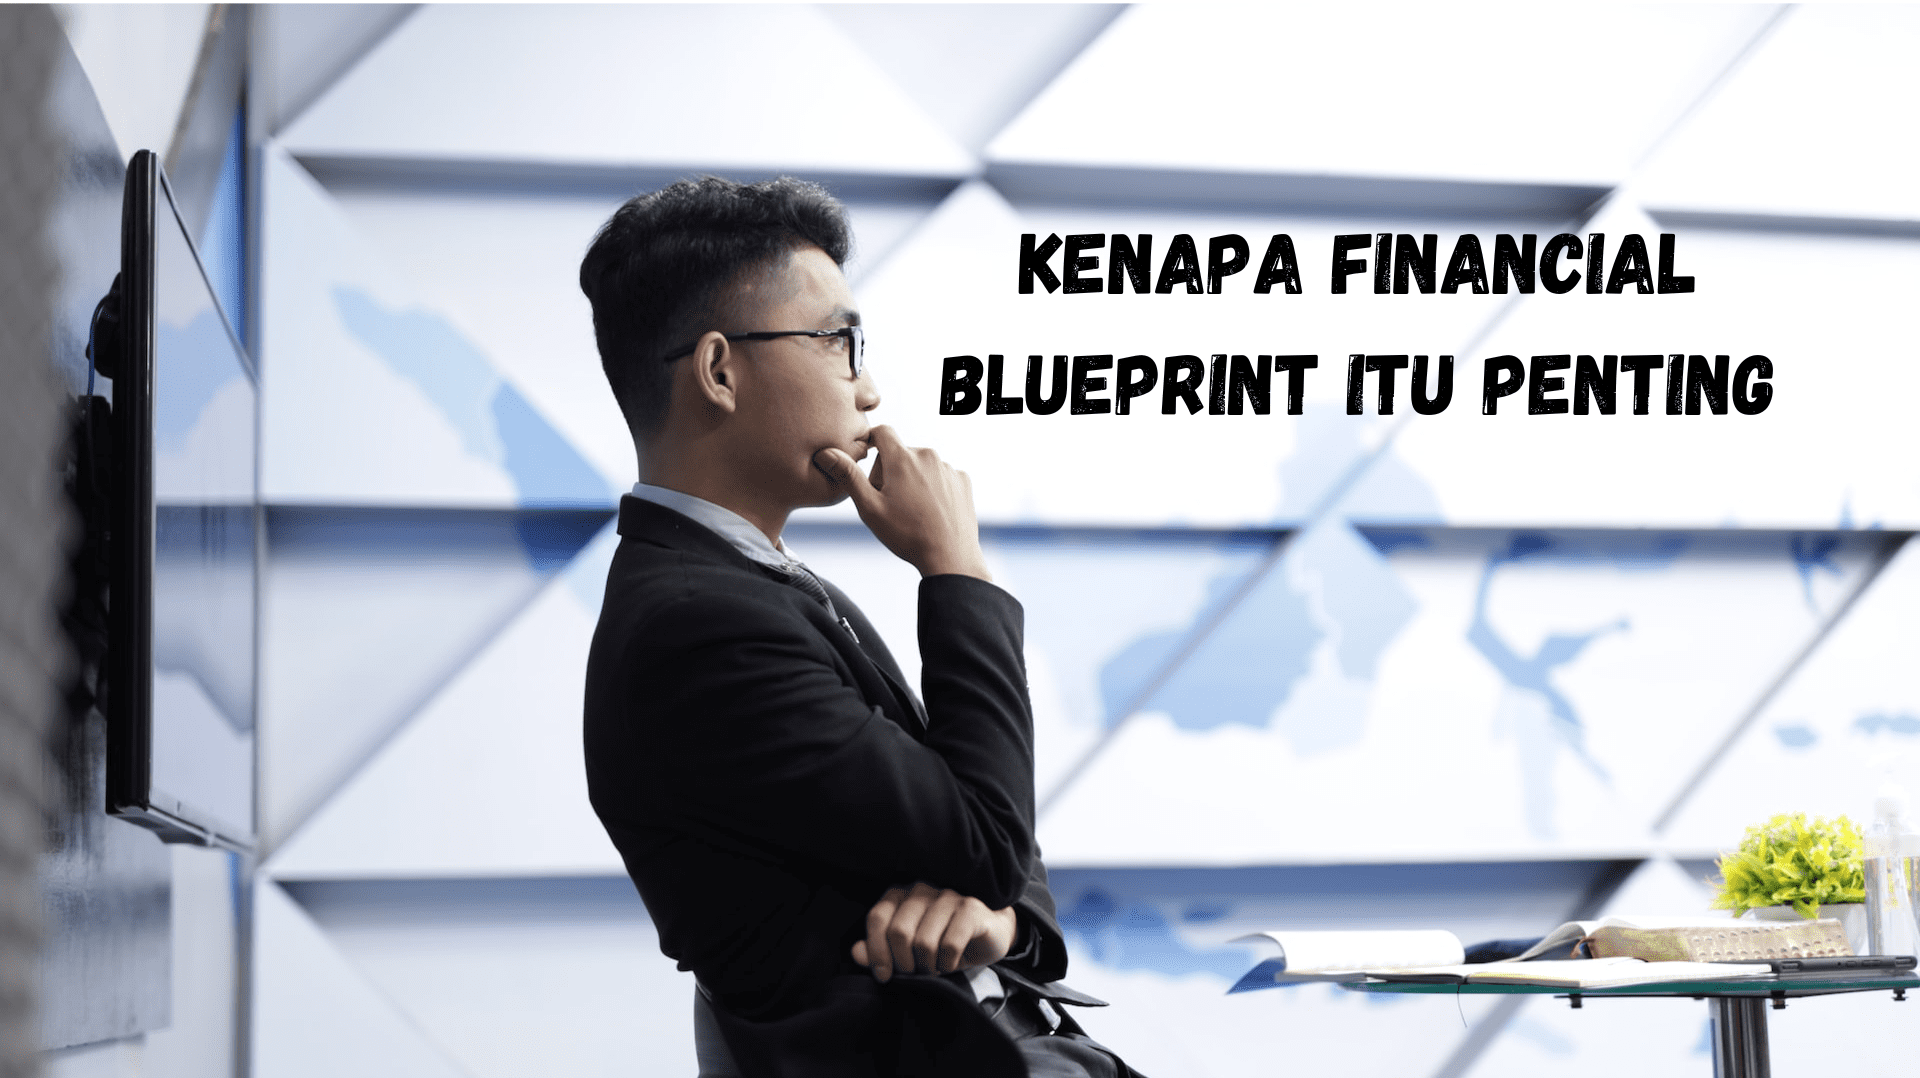 Kenapa Financial Blueprint Itu Penting